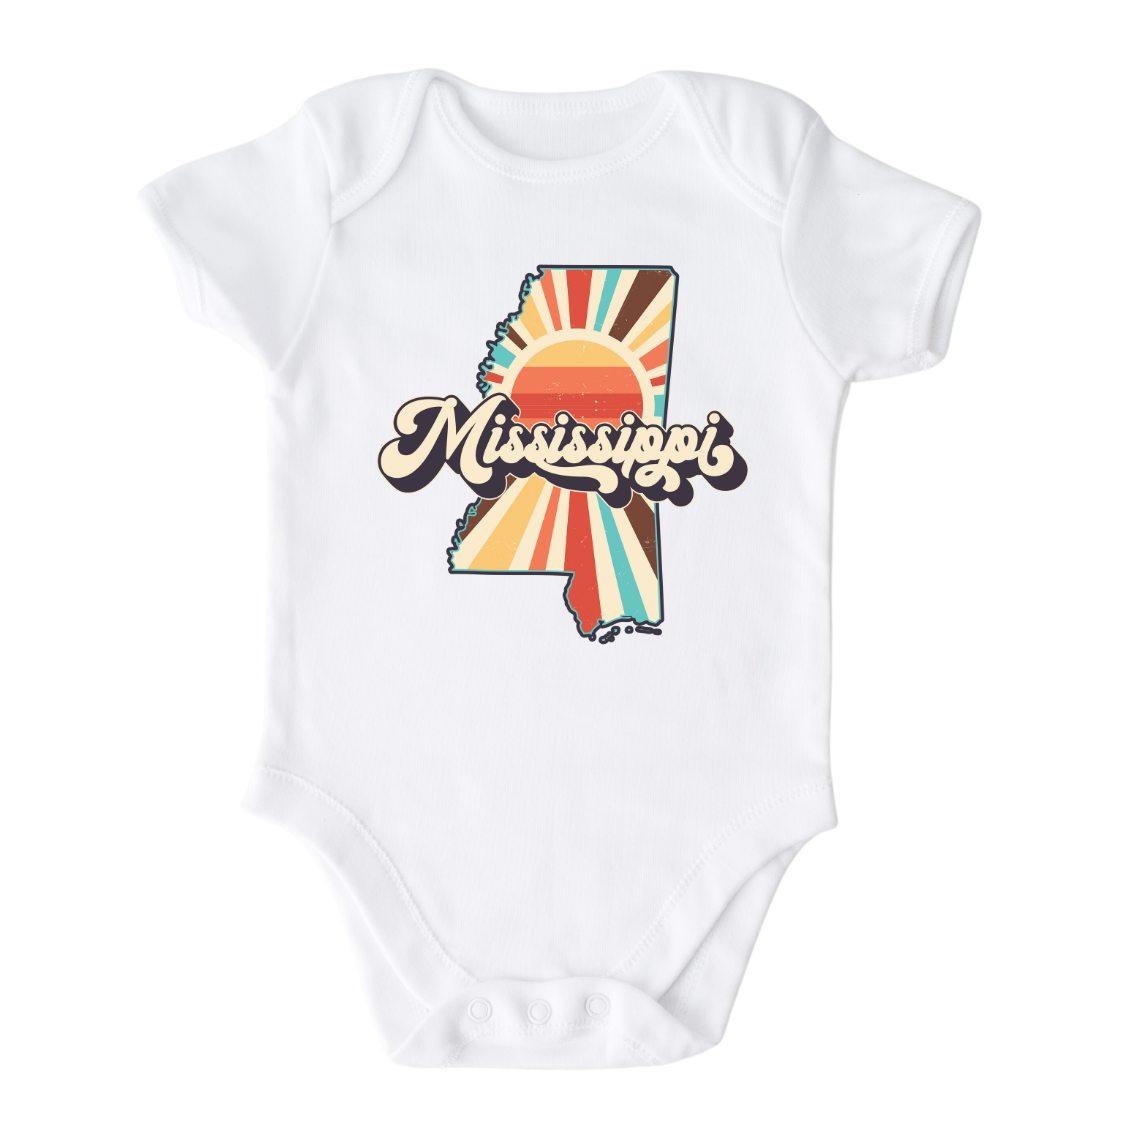 Mississippi Baby Onesie® Mississippi State Shirt for Kids Tshirt Mississippi Bodysuit